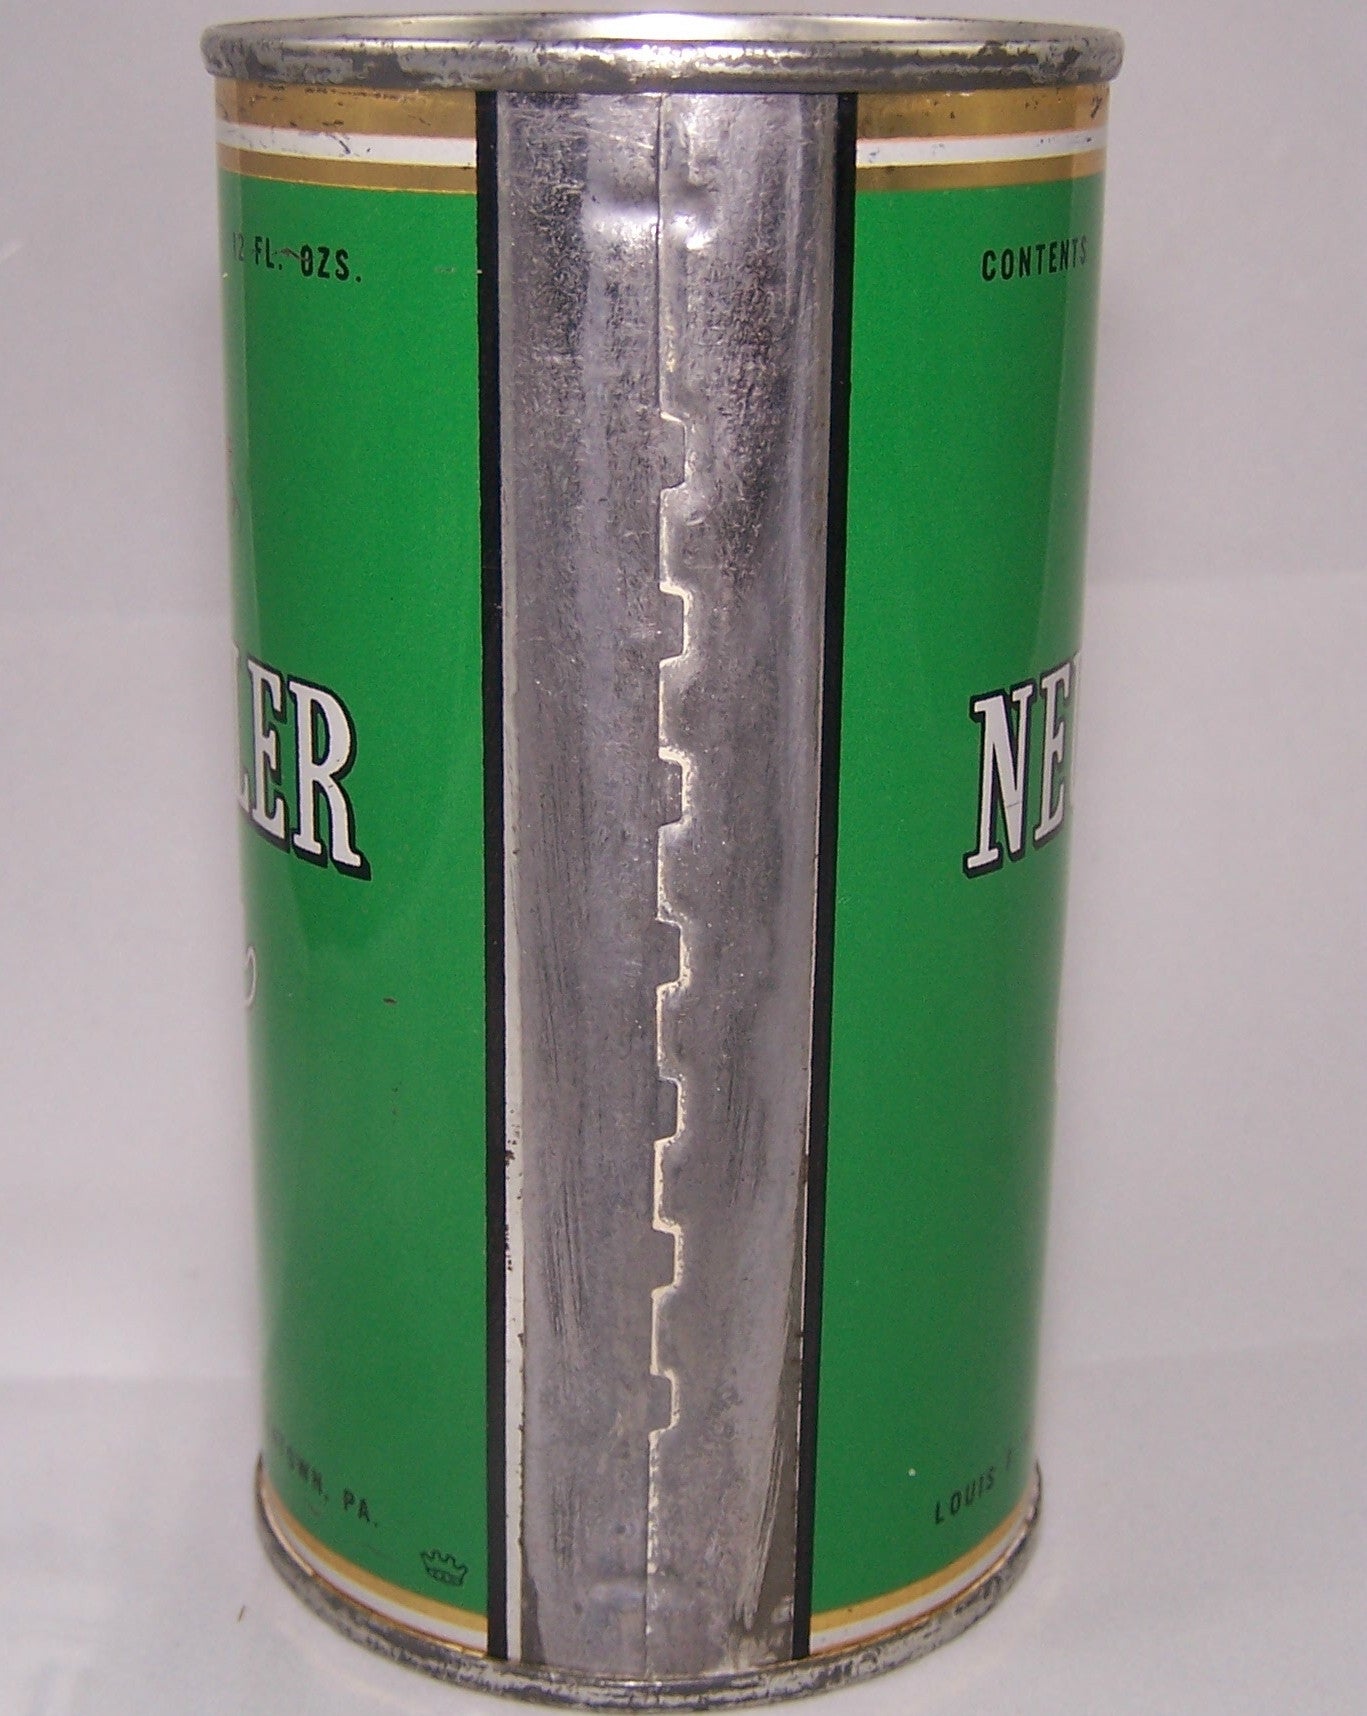 Neuweiler Cream Ale, USBC 102-35, Grade A1+ Sold on 2/27/15